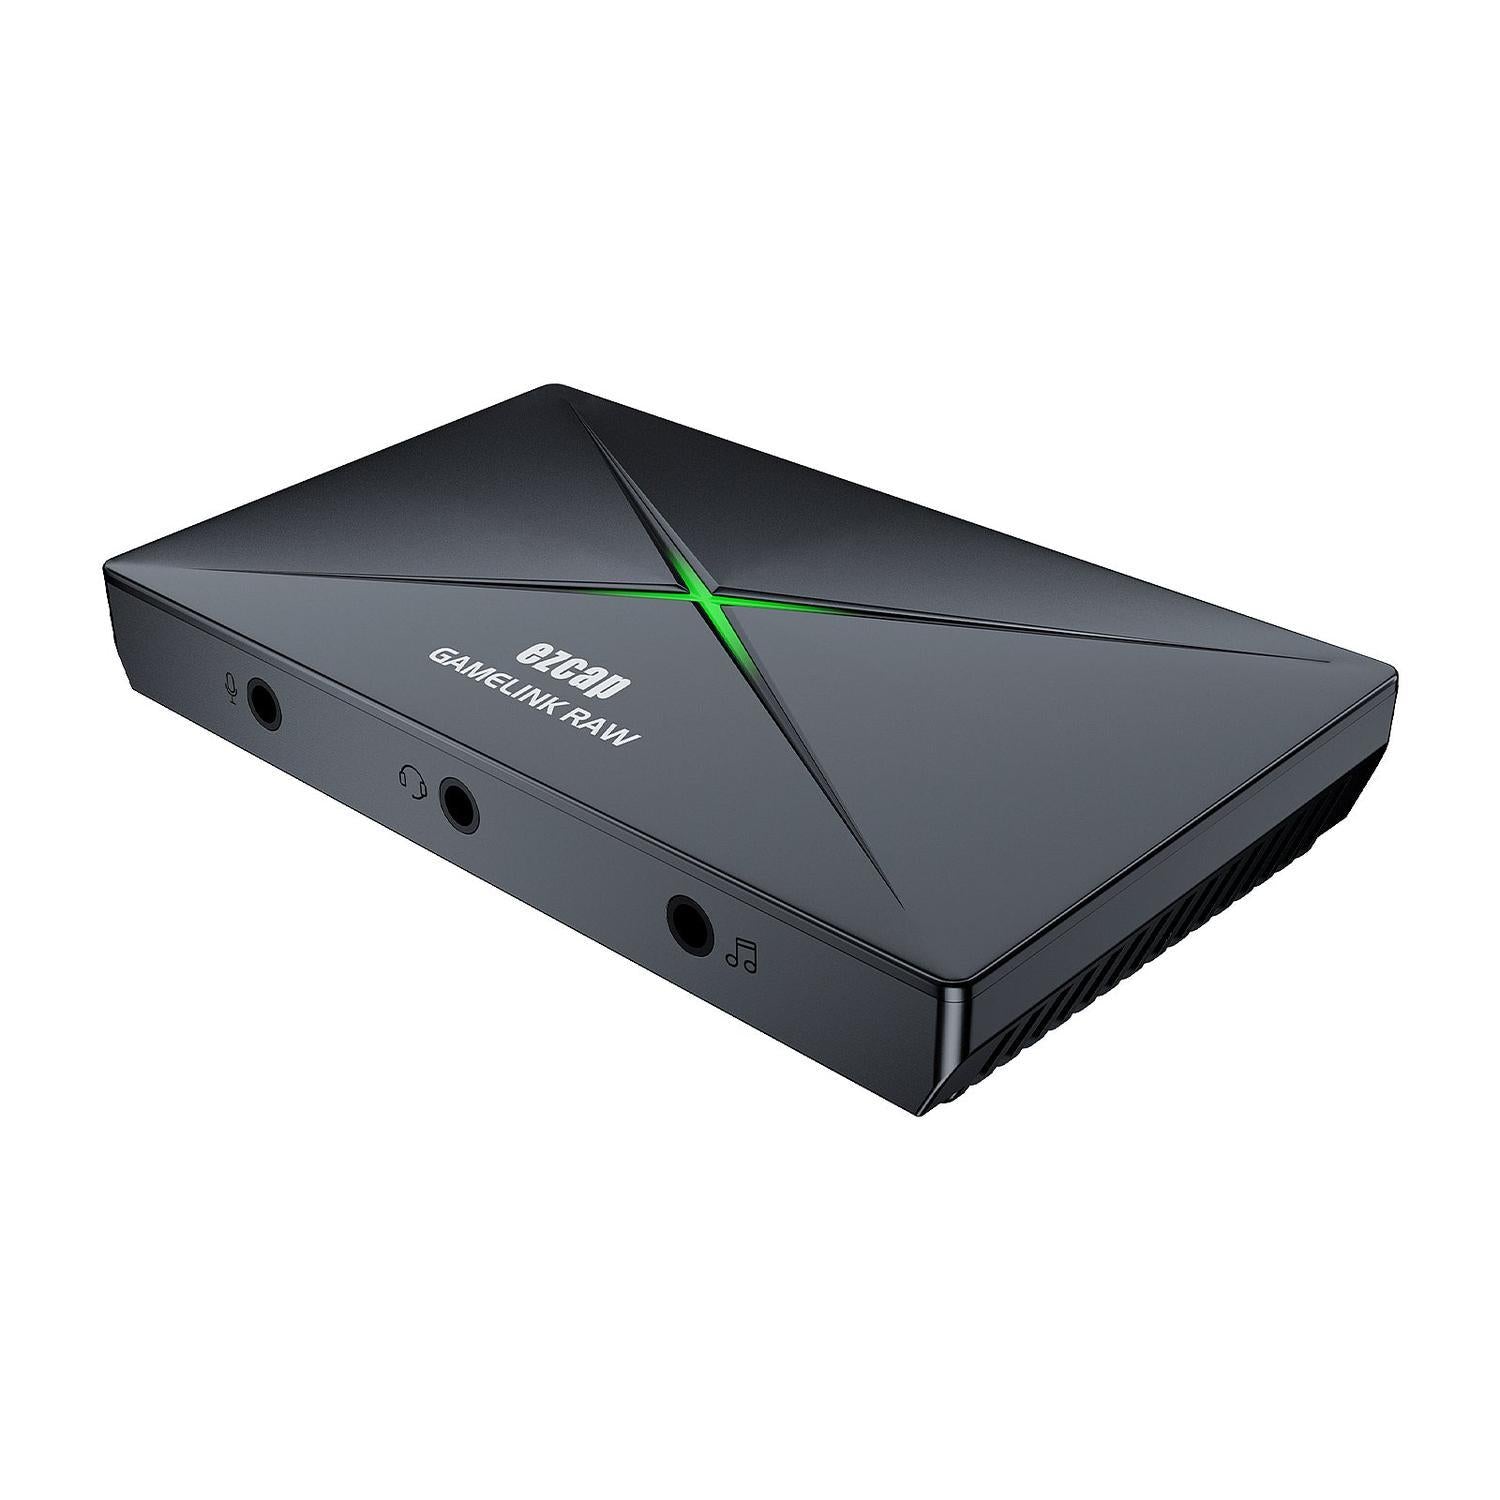 ezcap GameLink Capture Card 4Kp30 2Kp120 input/output/capture/streaming USB3.1 5Gbps